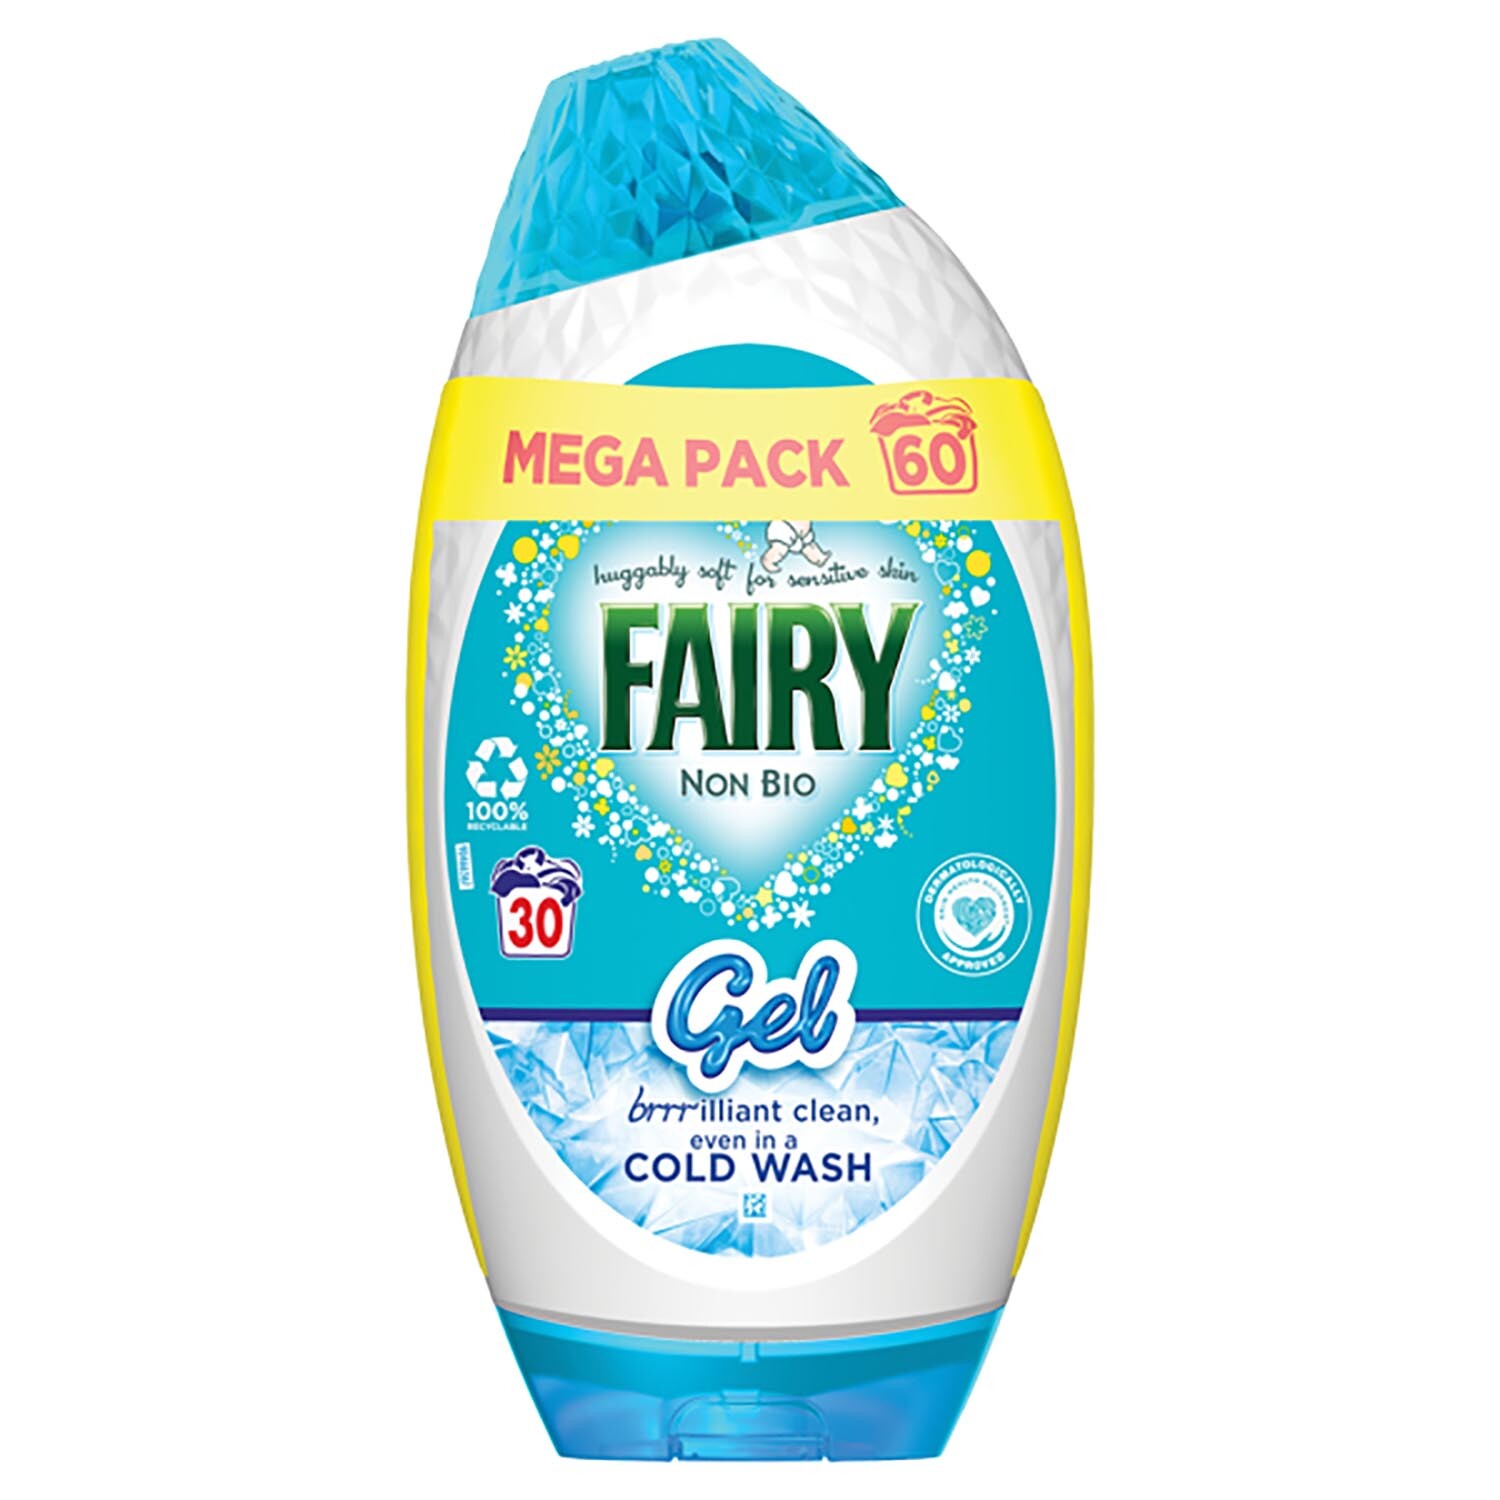 Fairy Non Bio Washing Gel  - 1.05l Image